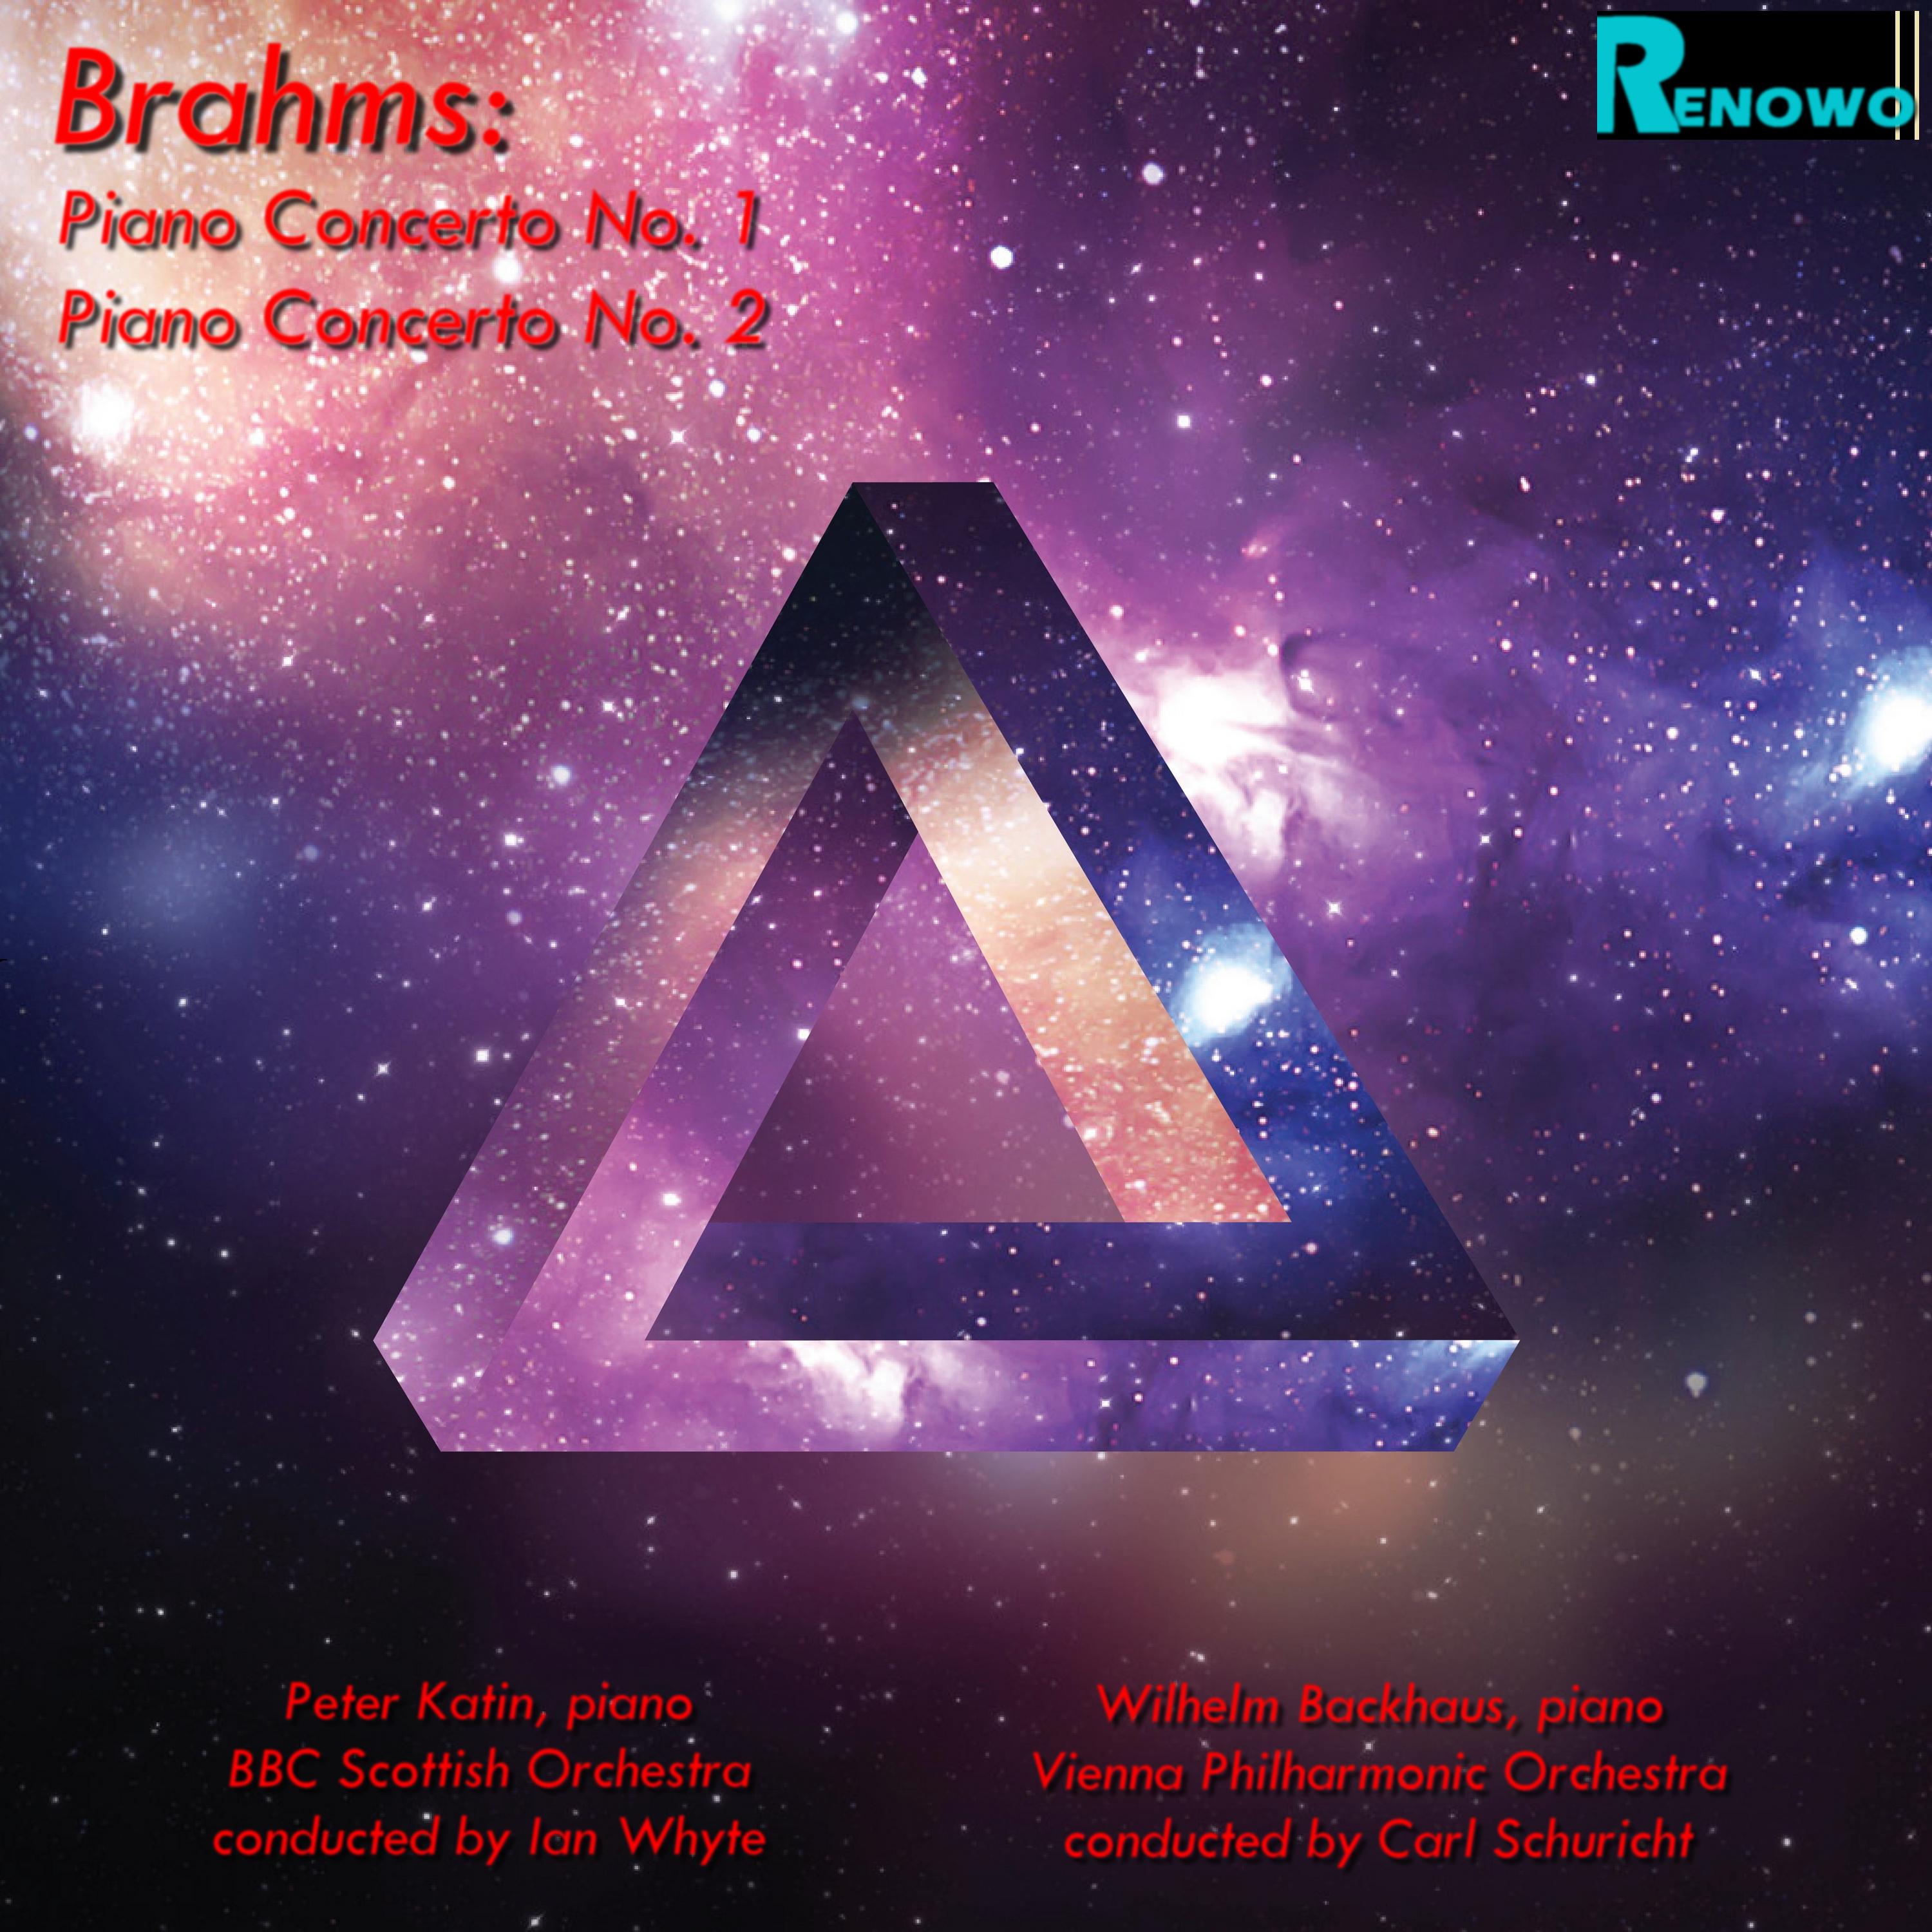 Brahms: Piano Concerto No. 1 and No.2